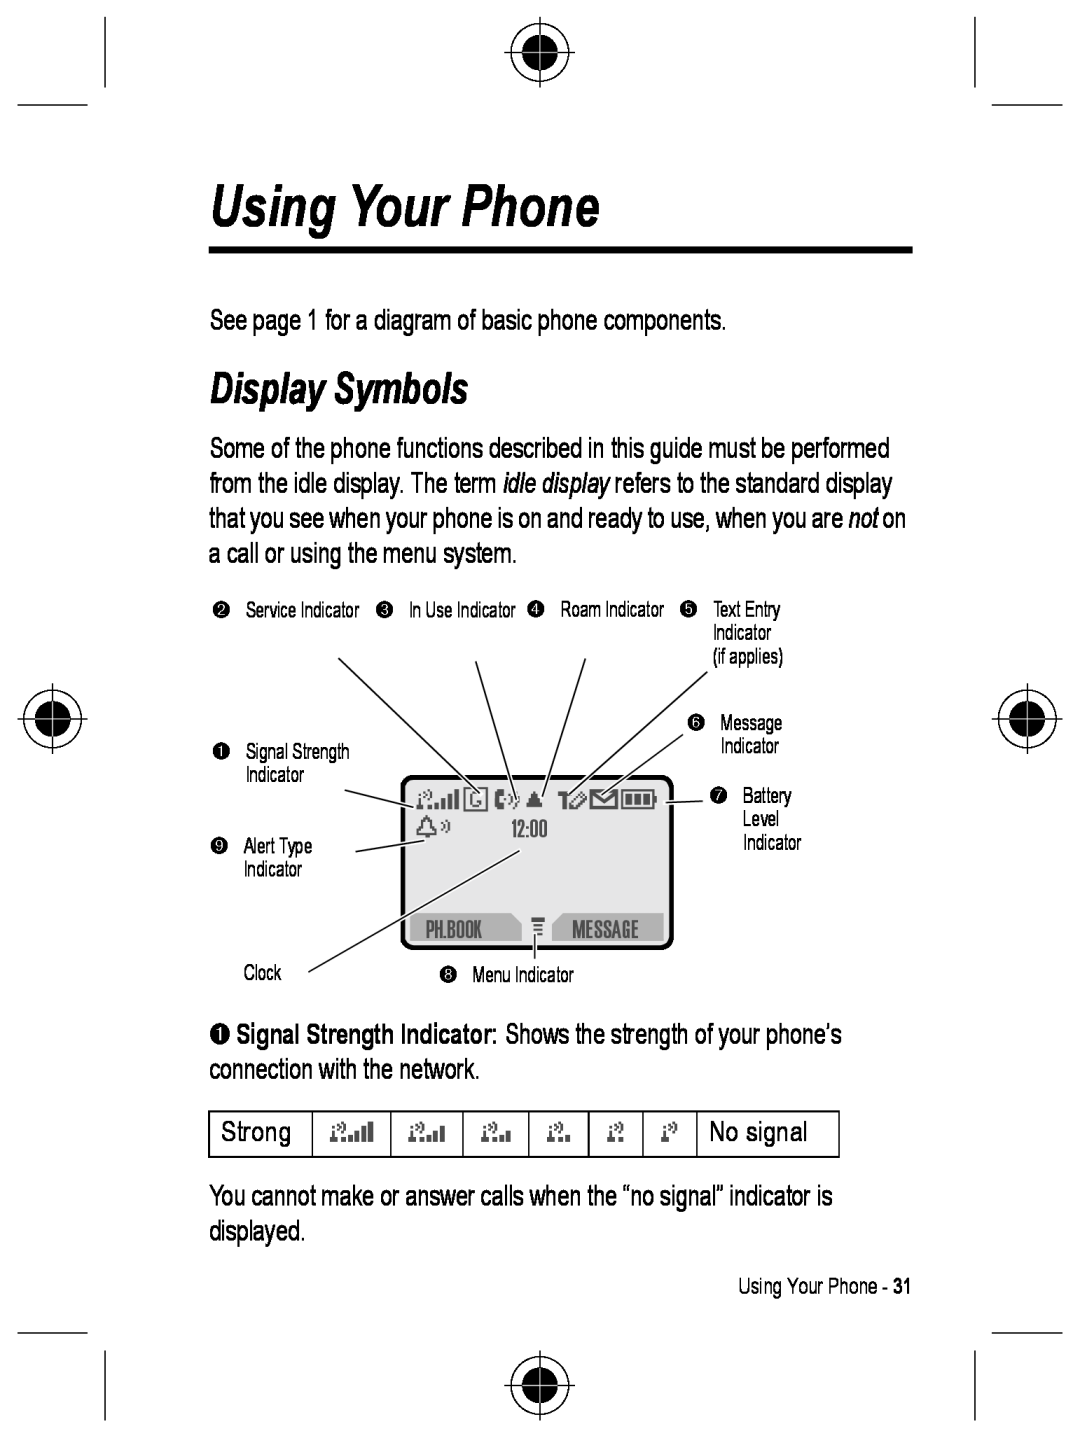 Motorola C330 manual Using Your Phone, Display Symbols, 5éO, õ=E, 5 4 3 2 1 j 